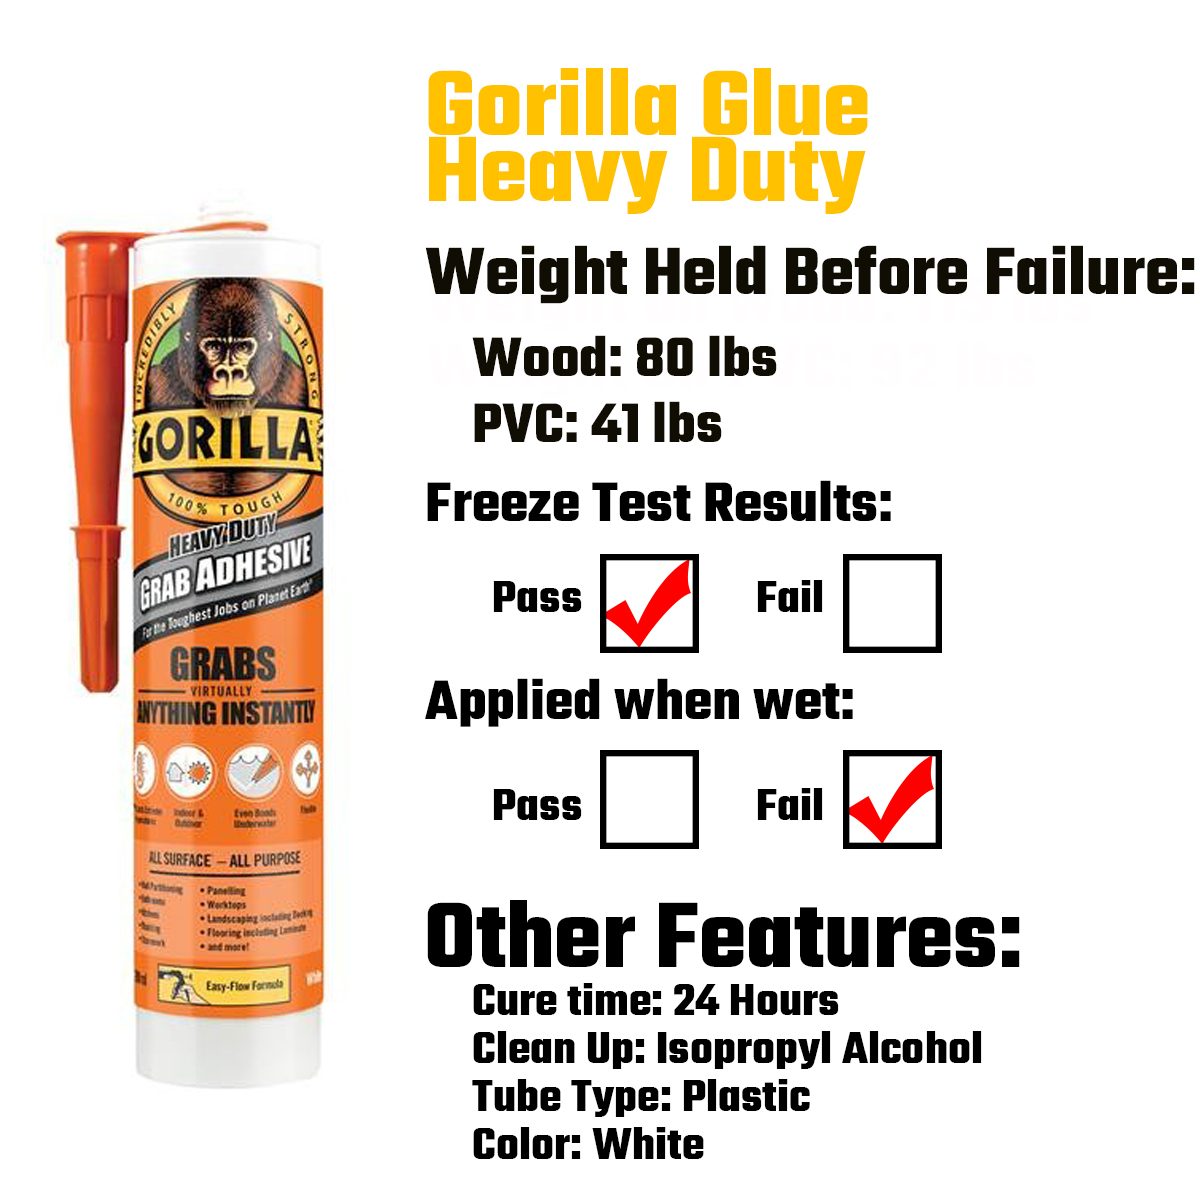  Gorilla Original Gorilla Glue, Waterproof Polyurethane Glue, 8  Ounce Bottle, Brown, (Pack of 1) : Industrial & Scientific